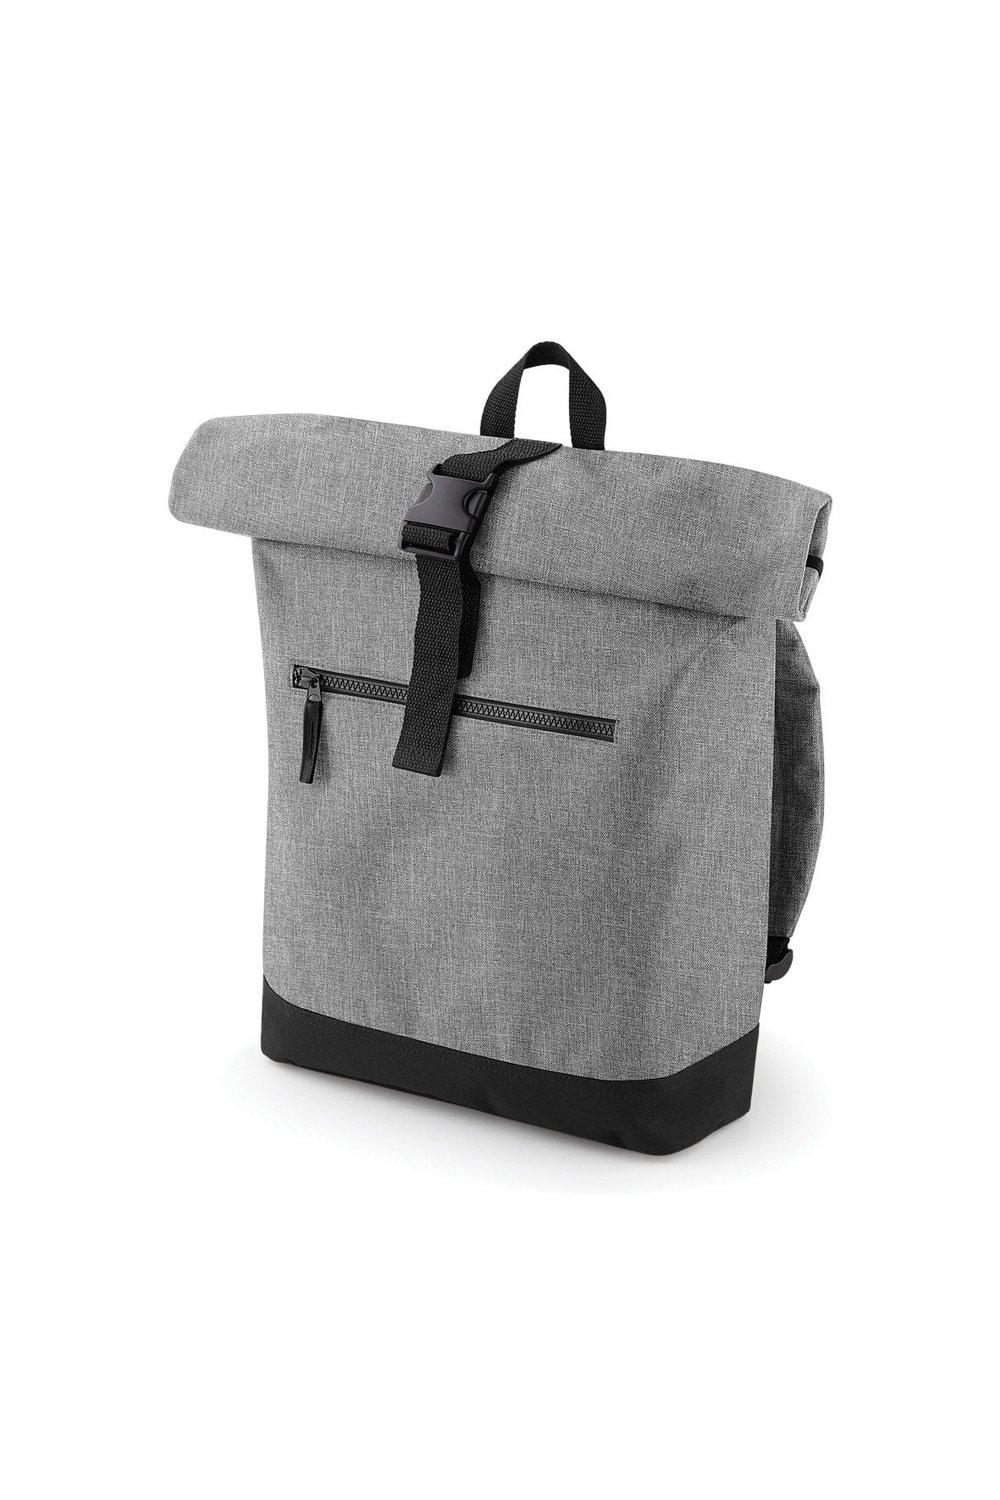 Roll-Top Backpack Rucksack Bag (12 Litres) Pack of 2